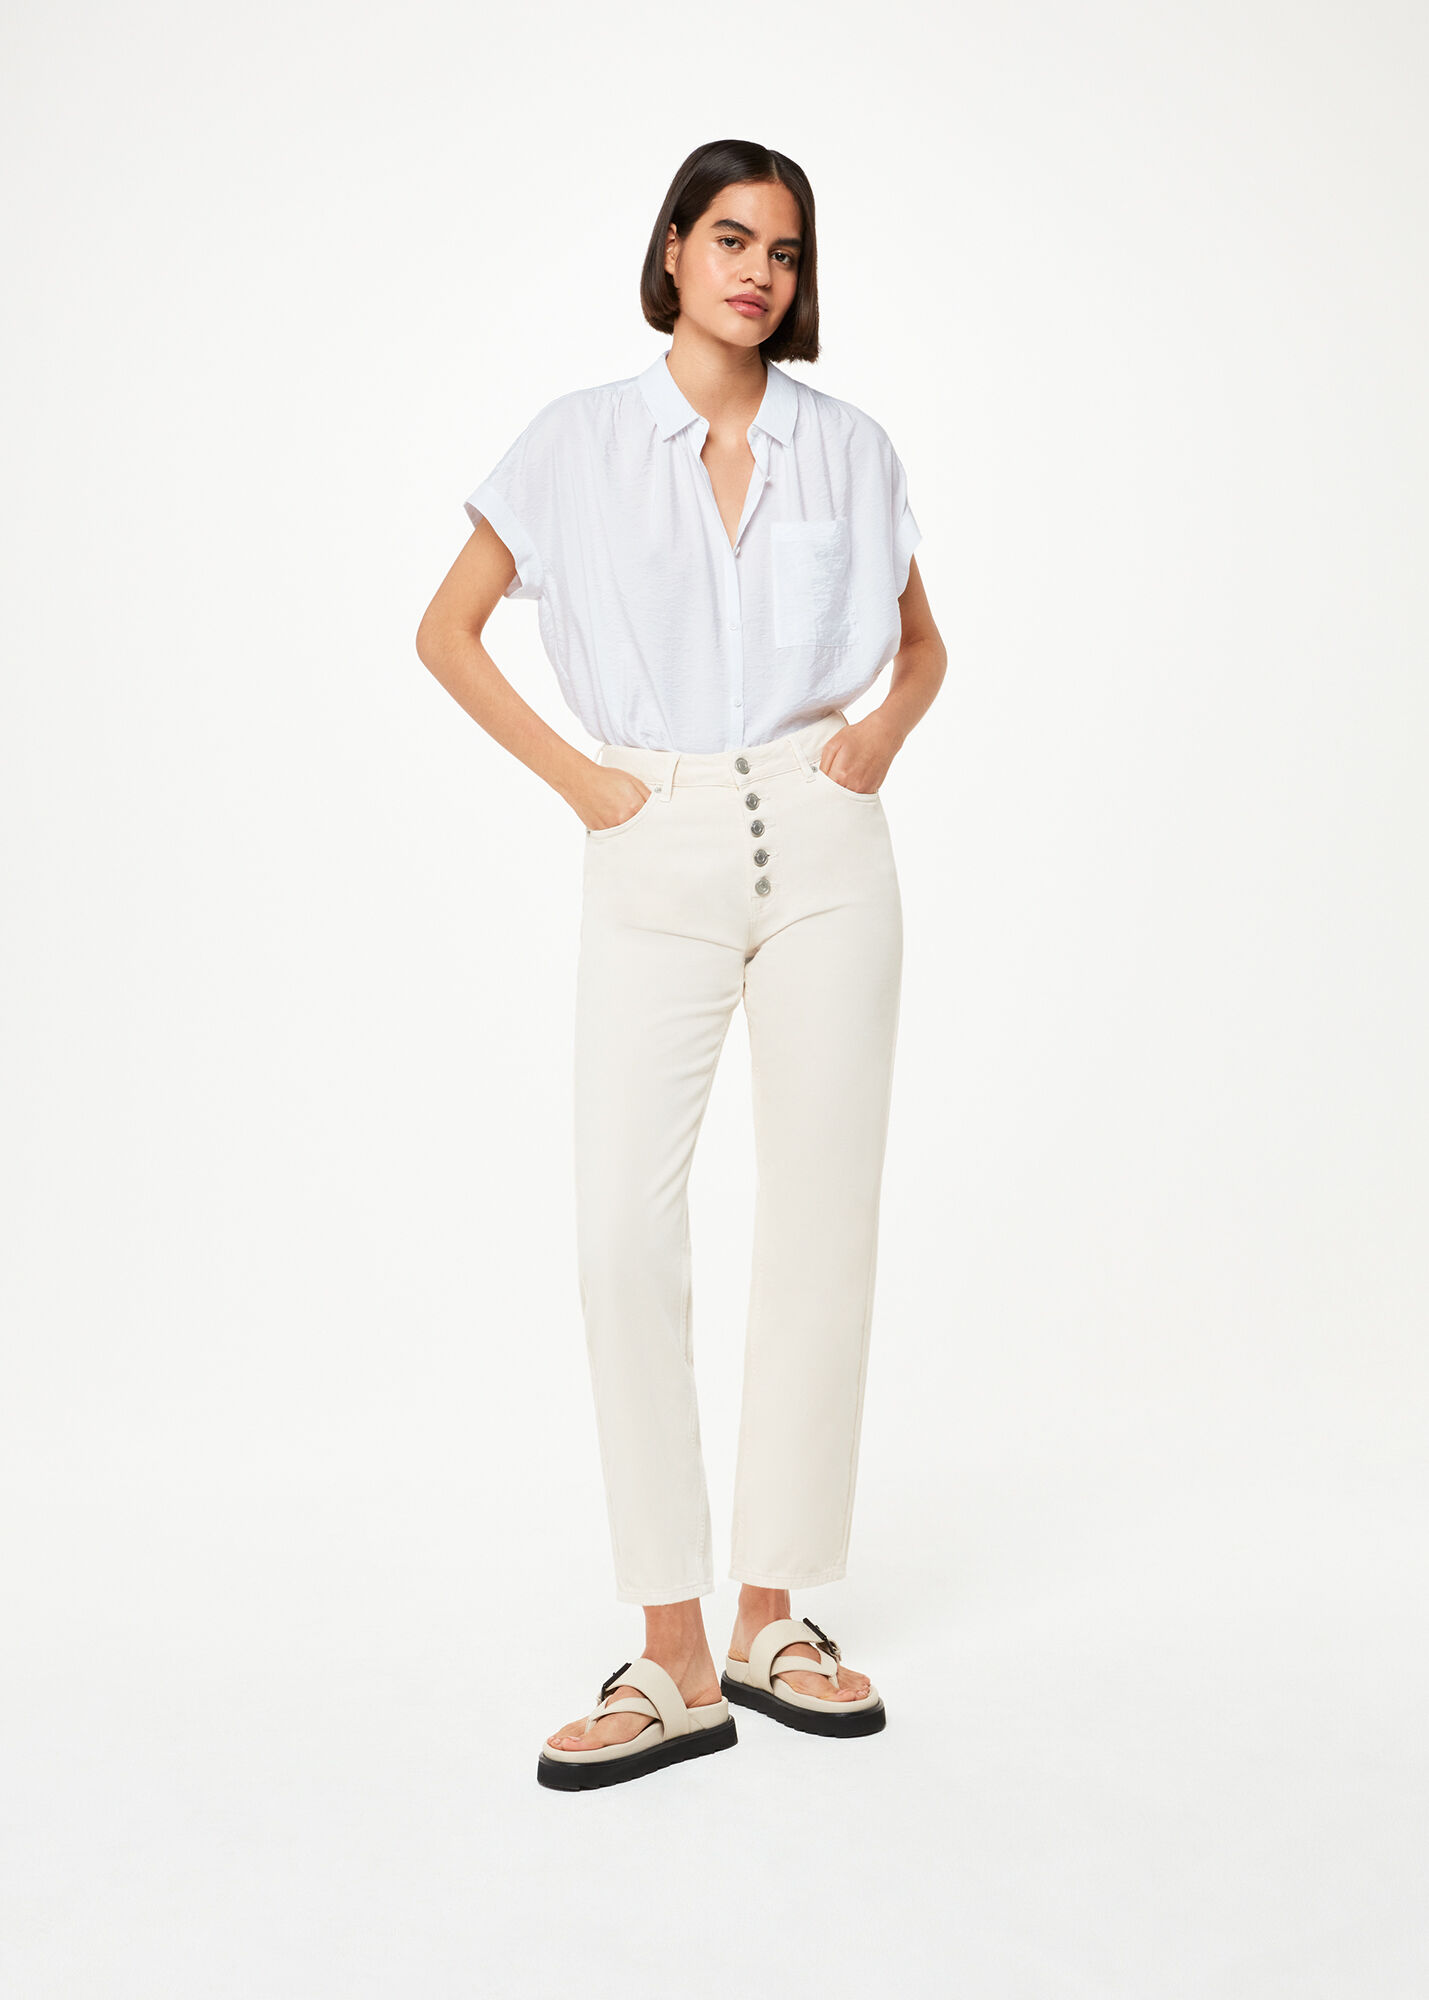 Whistles Casual White Short Sleeve Shirt | Chic Women's Summer Wear